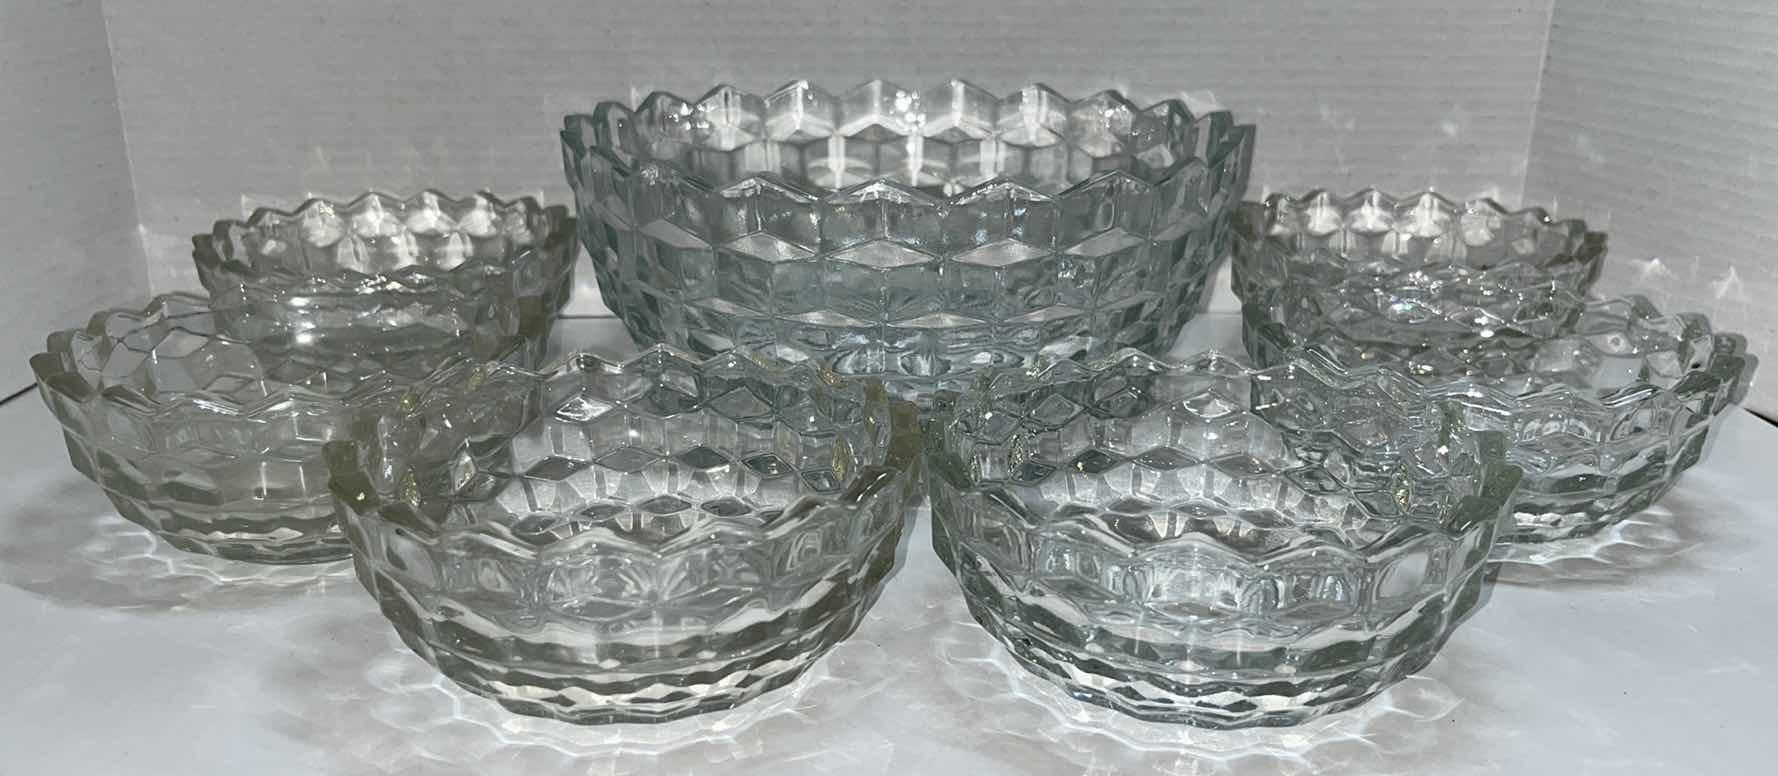 Photo 1 of VINTAGE 9" FOSTORIA AMERICAN CLEAR GLASS SERVING BOWL & 5” DESSERT BOWLS